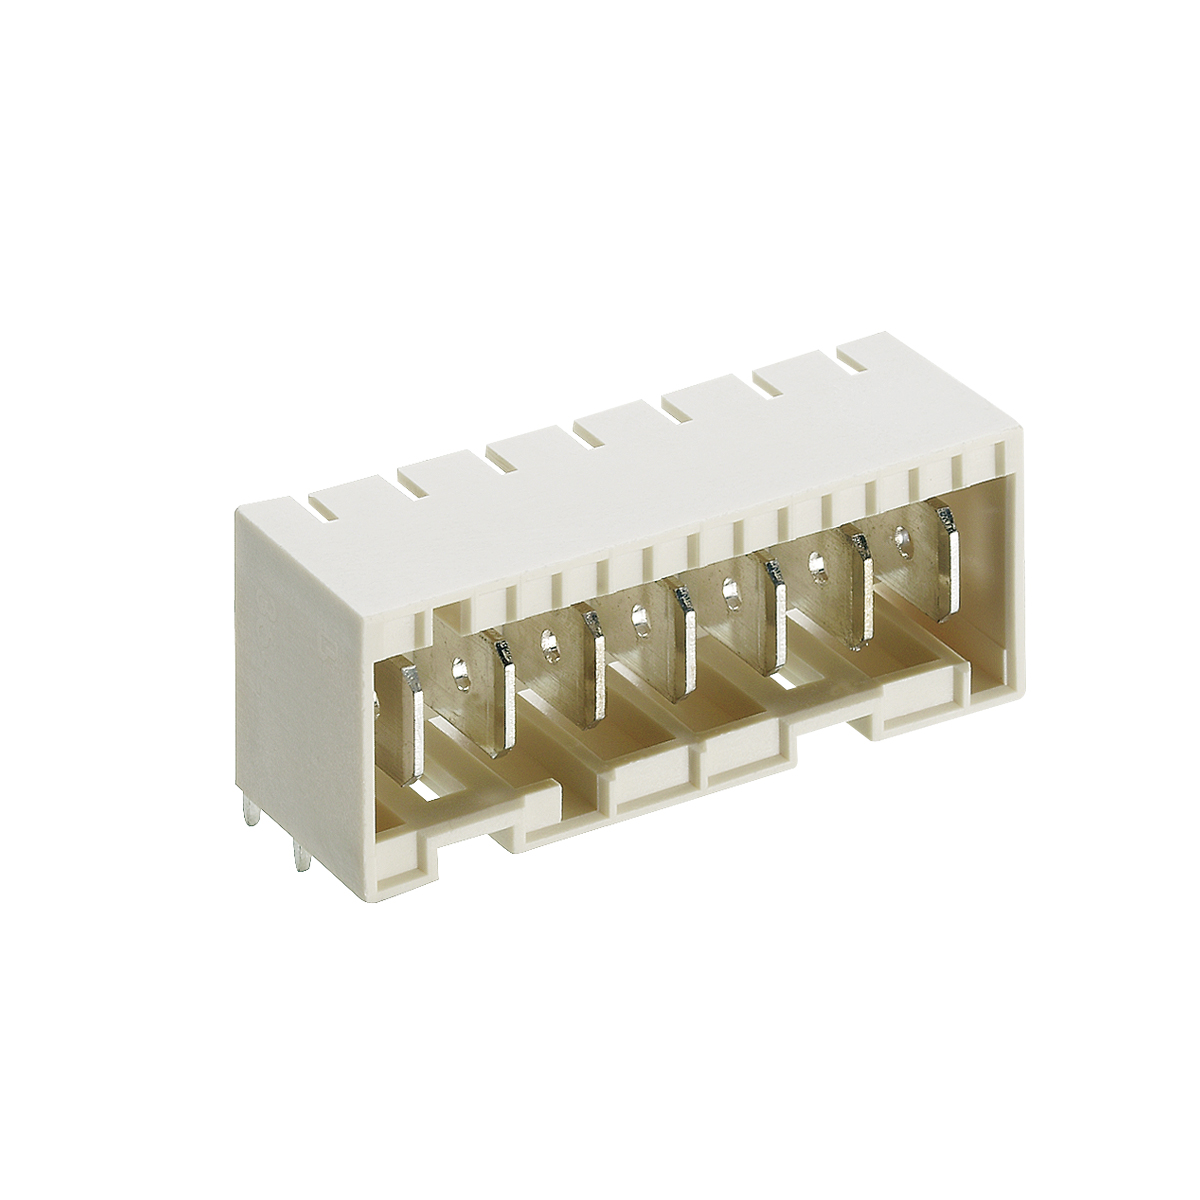 Lumberg: 3645 V167 (Series 36 | RAST 5 connectors, pitch 5.0 mm)